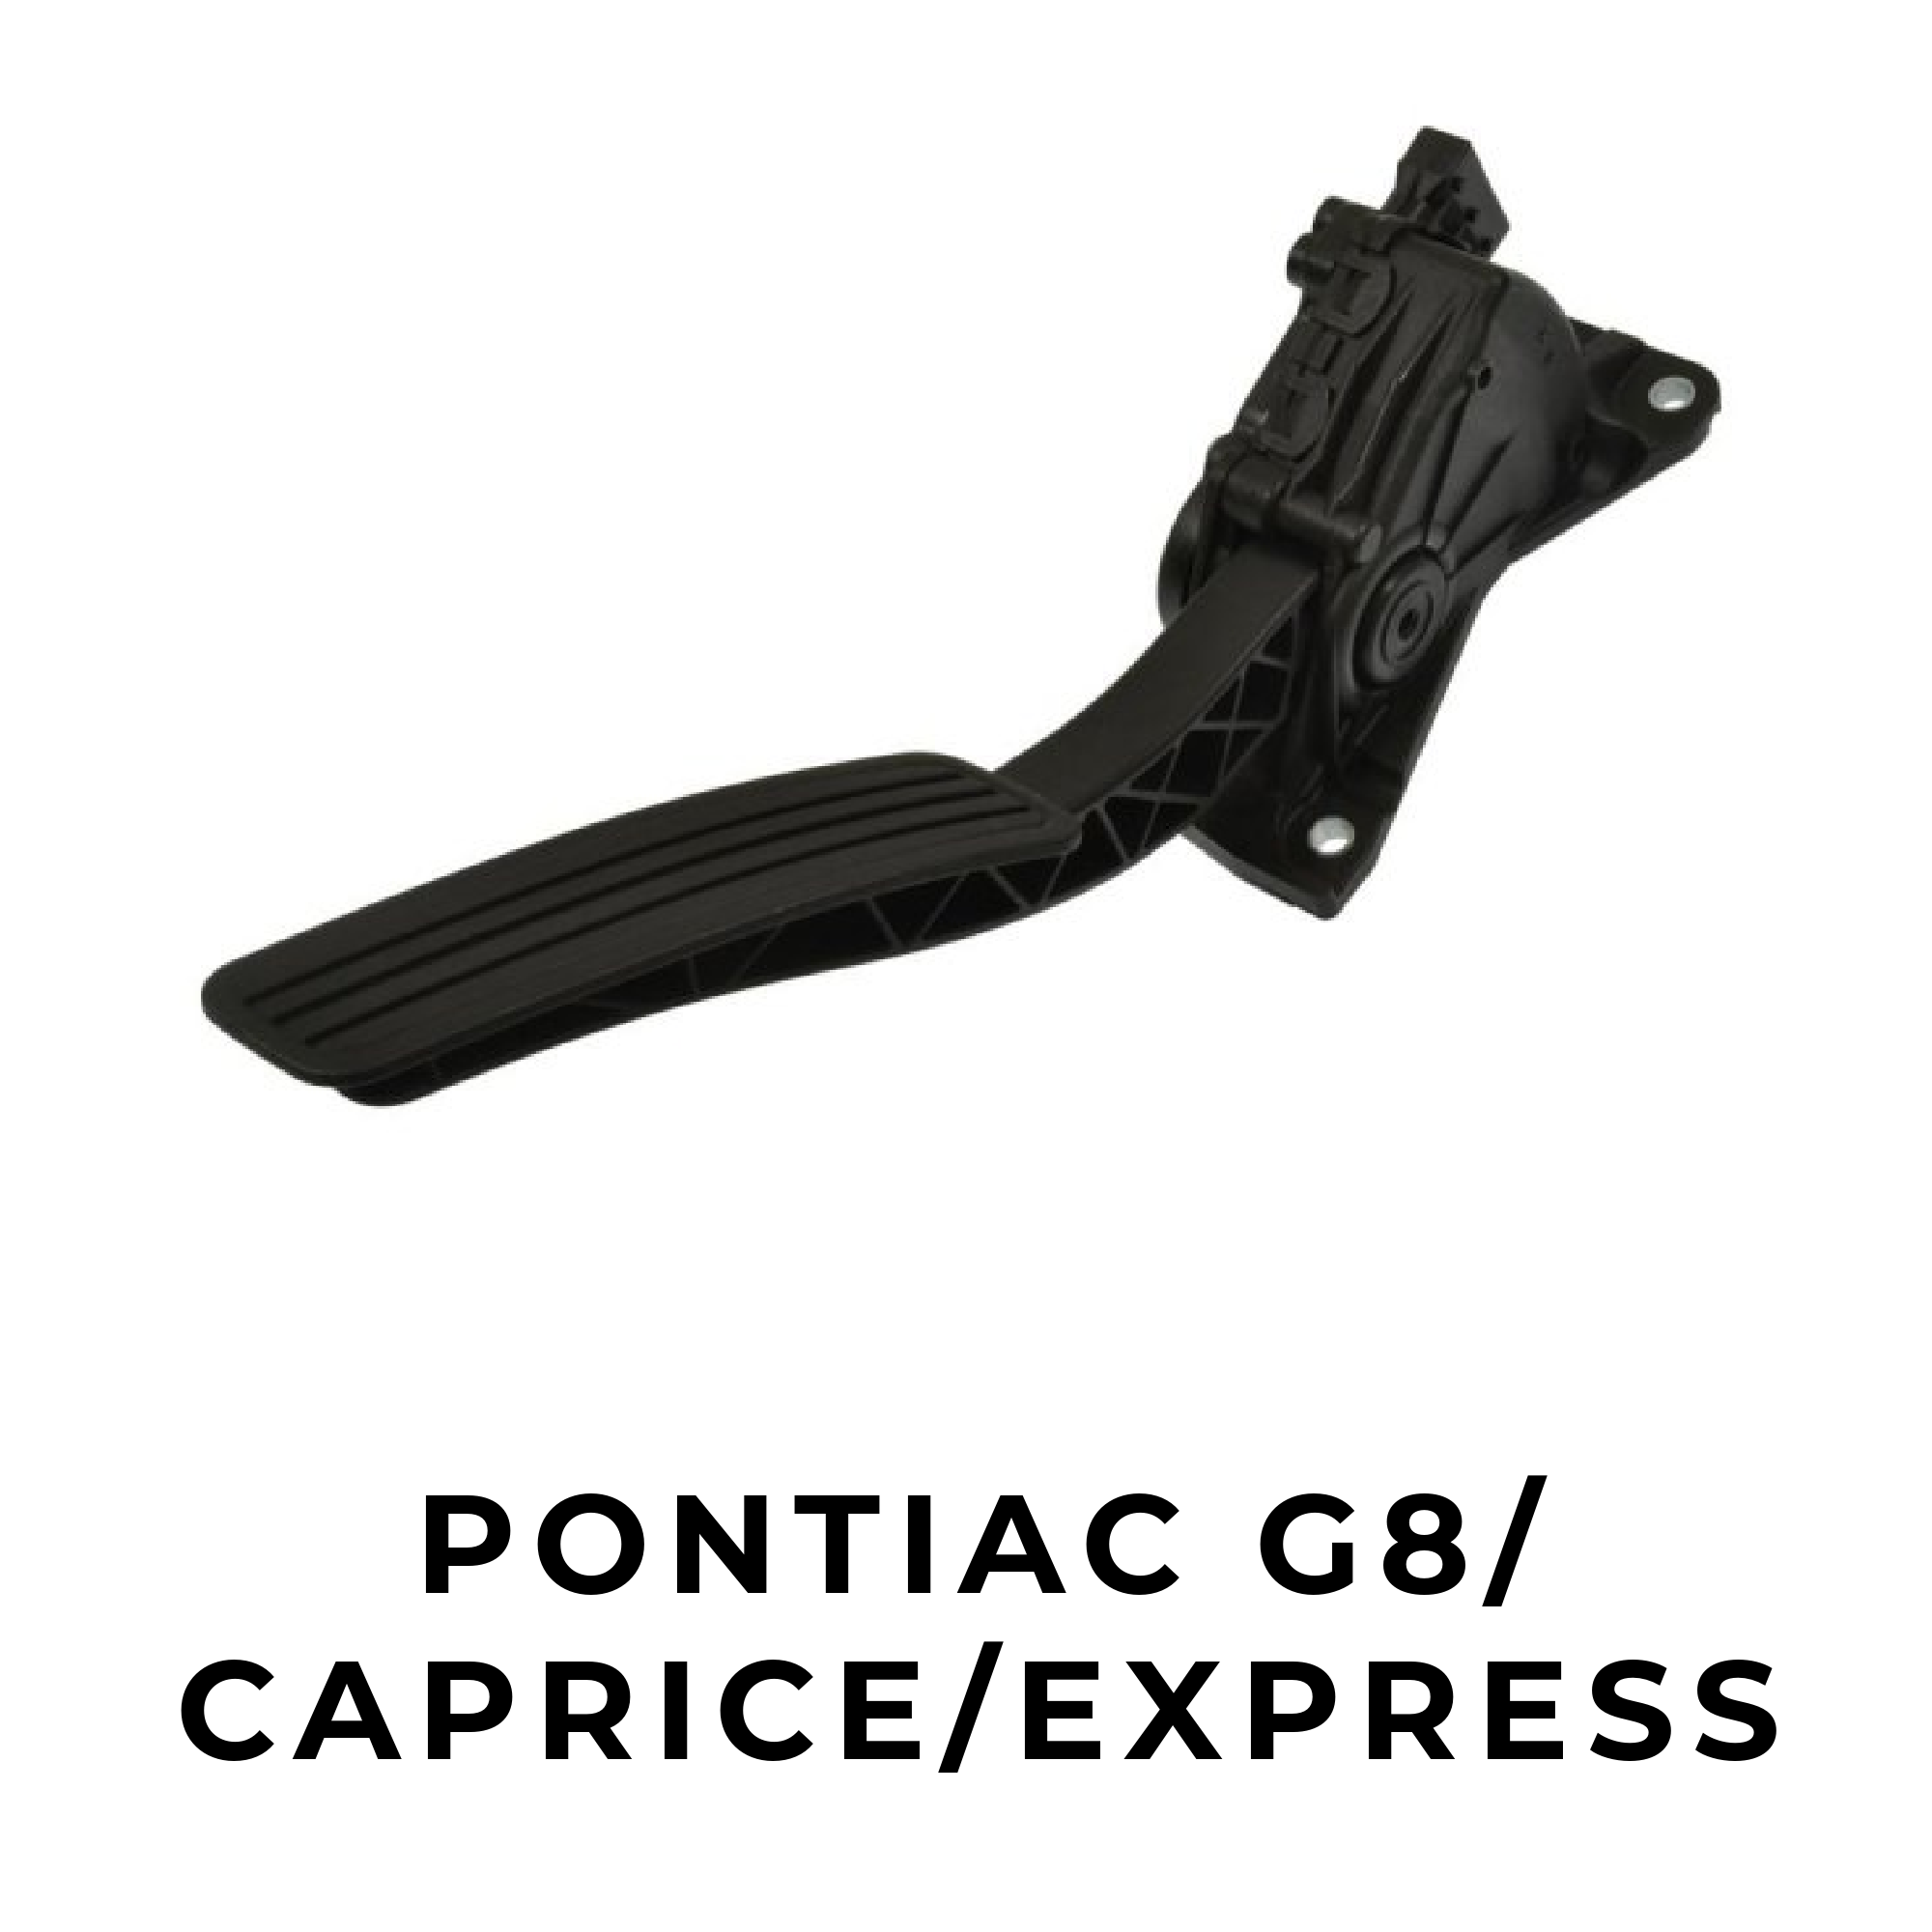 Pontiac G8/Caprice/Express +$20.00